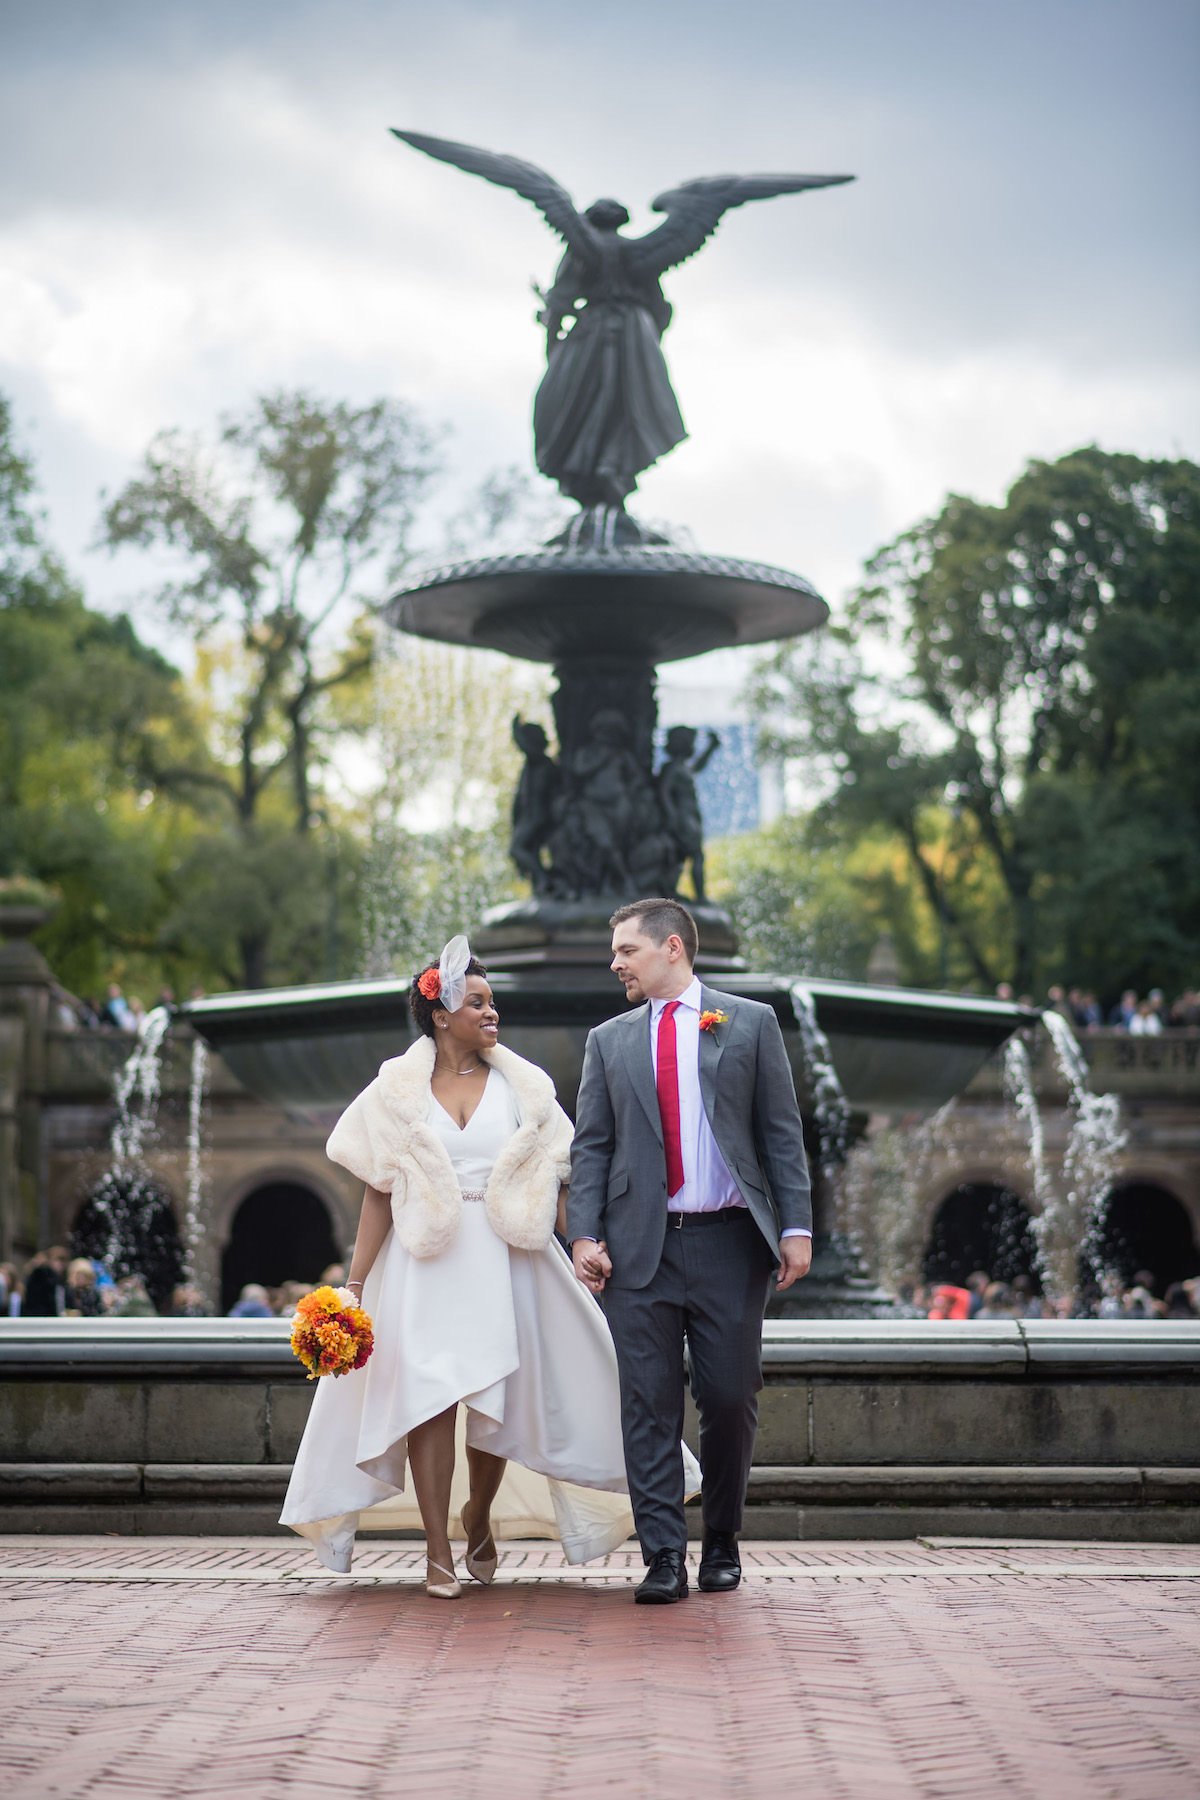 Wed in Central Park12.jpg